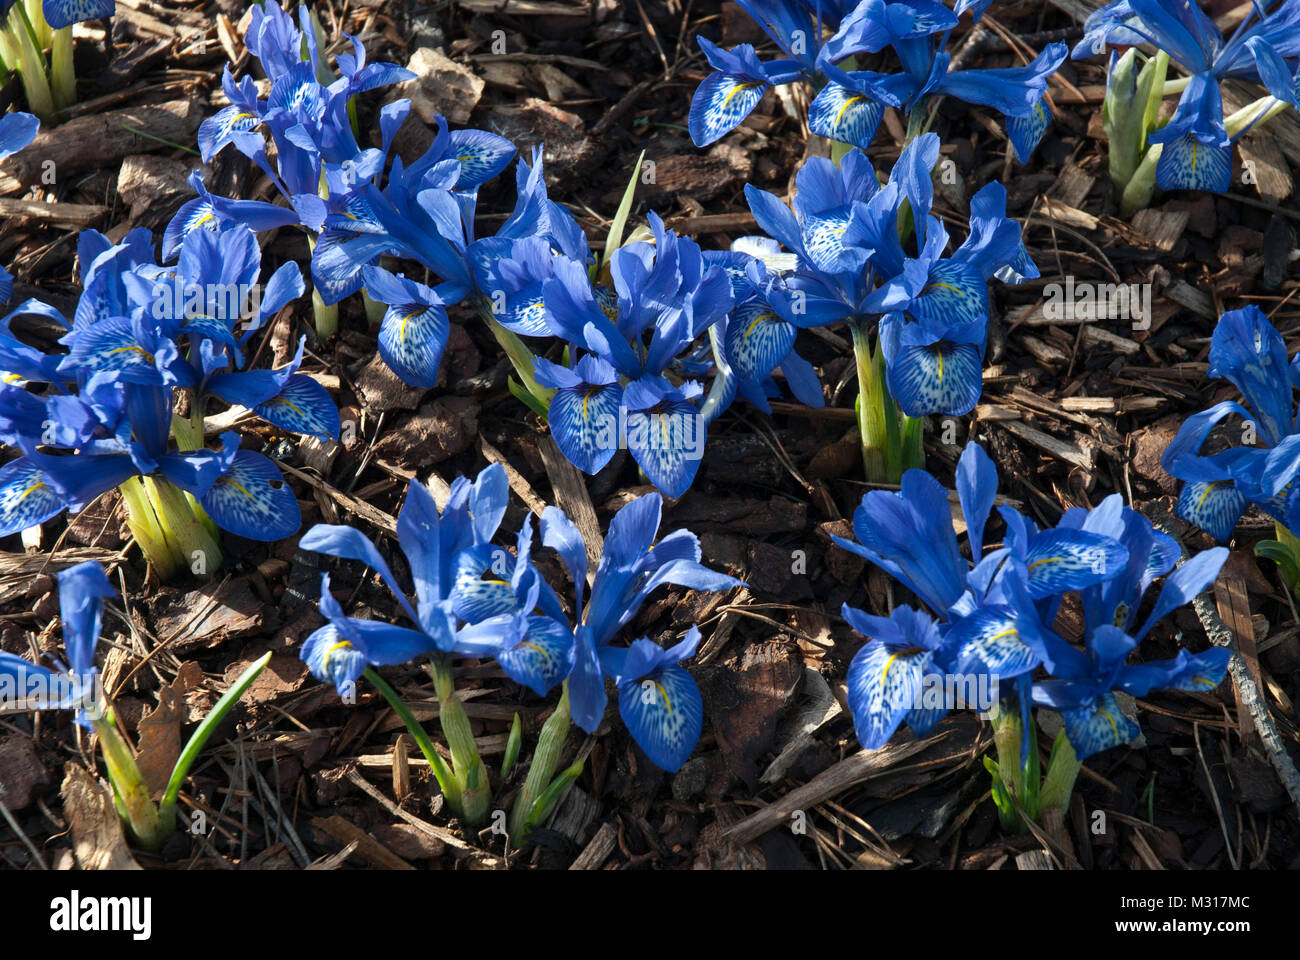 Iris bleu vif, fruit d'écorce granito Banque D'Images